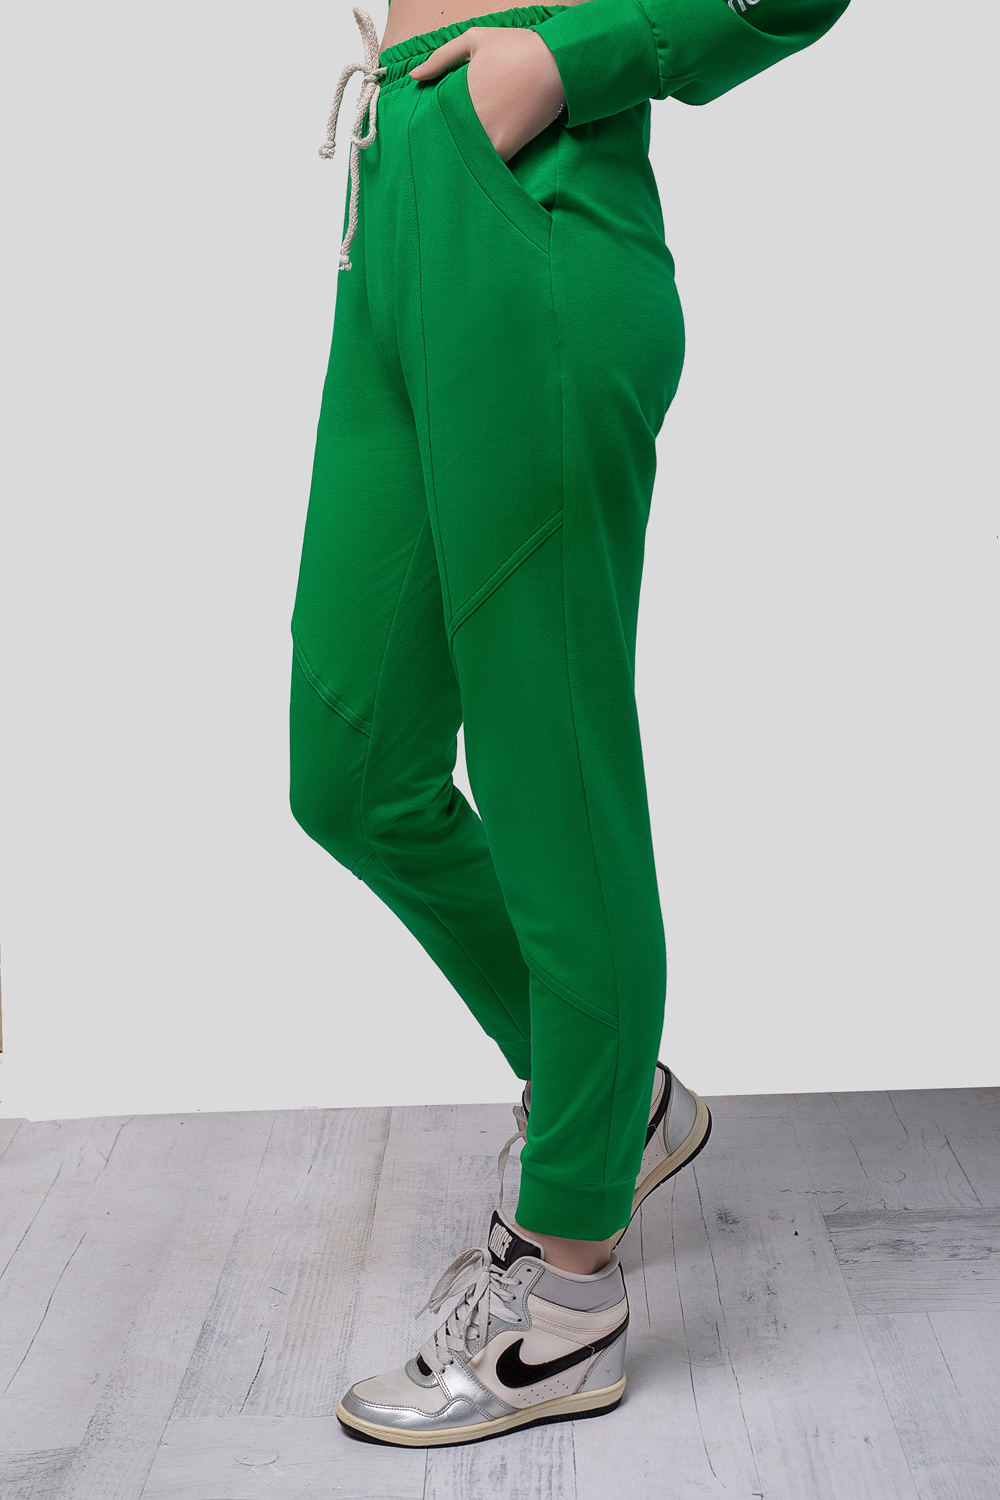 Green pants with drawstrings